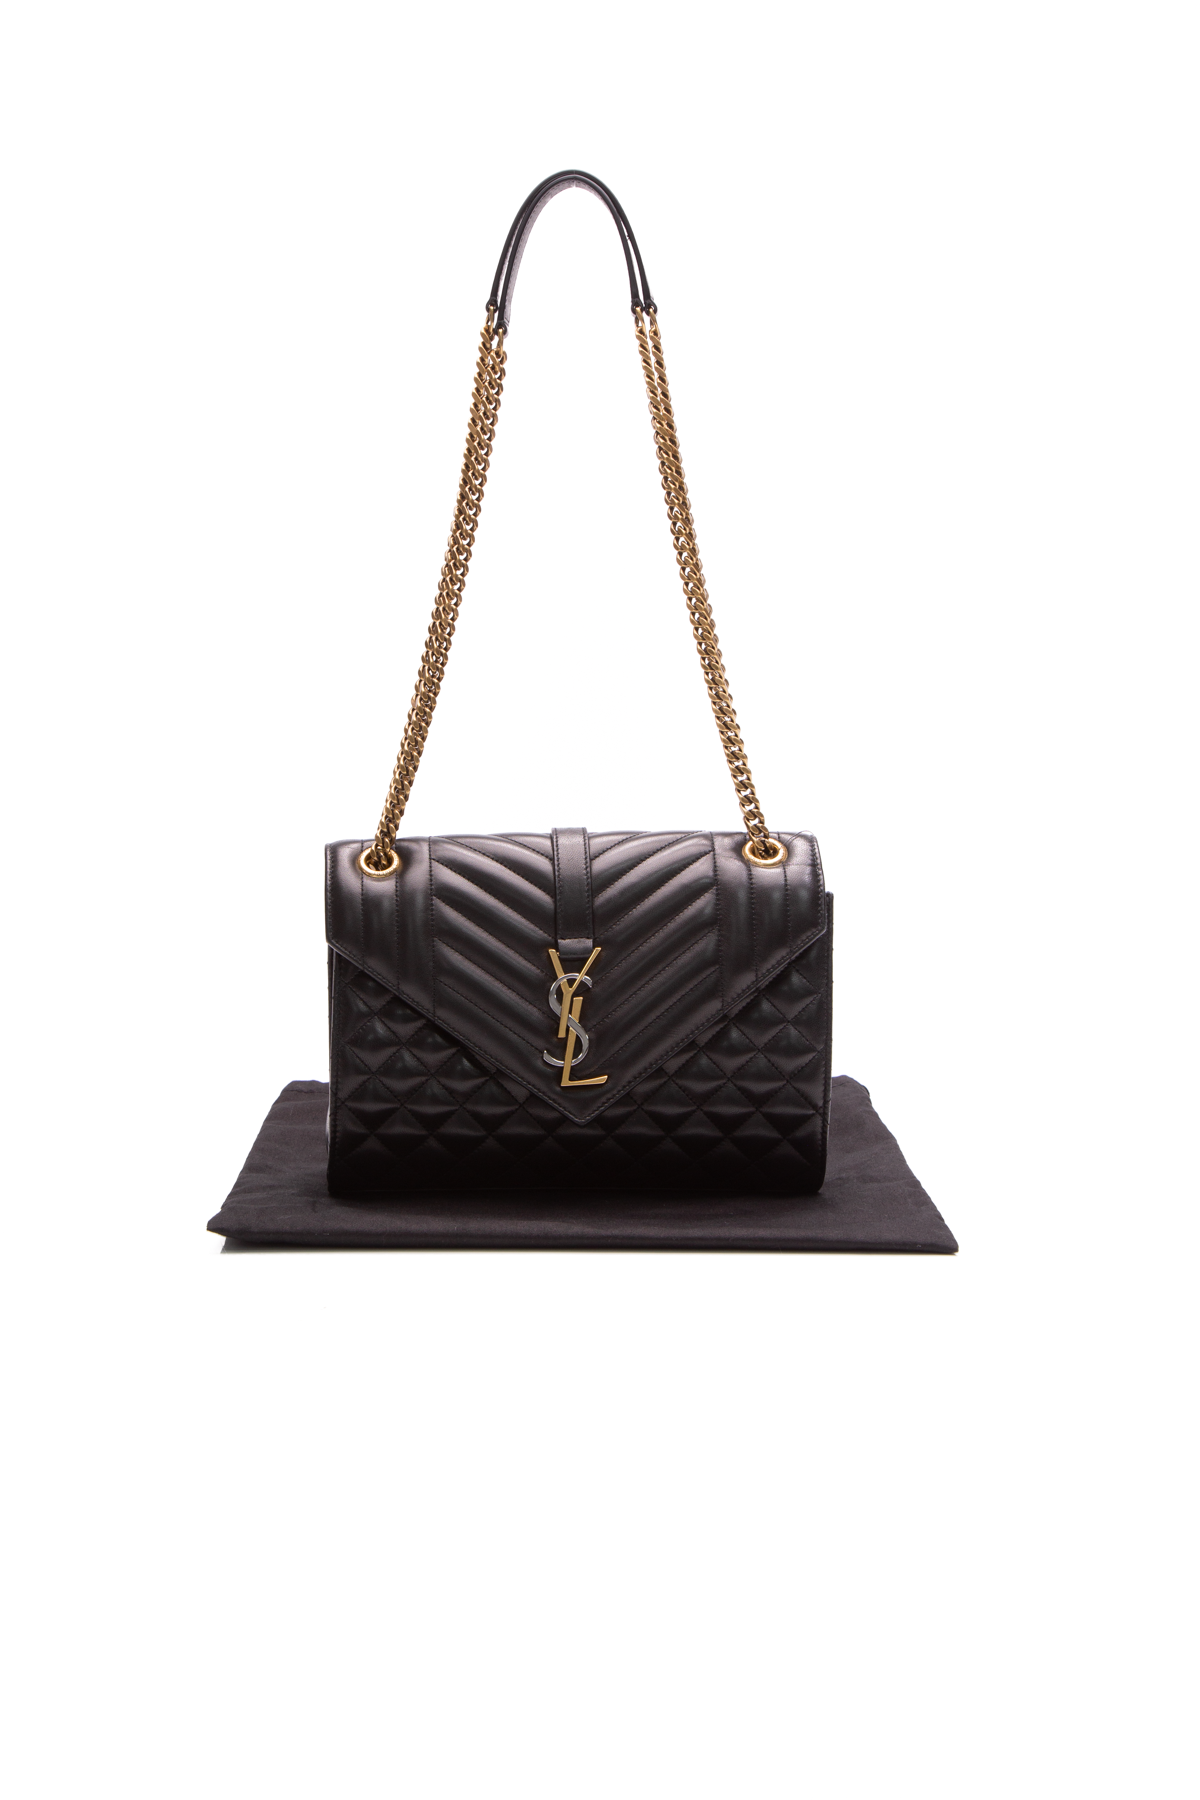 Saint Laurent Medium Envelope Bag Review  Luxury Shopping at YSL in Paris  